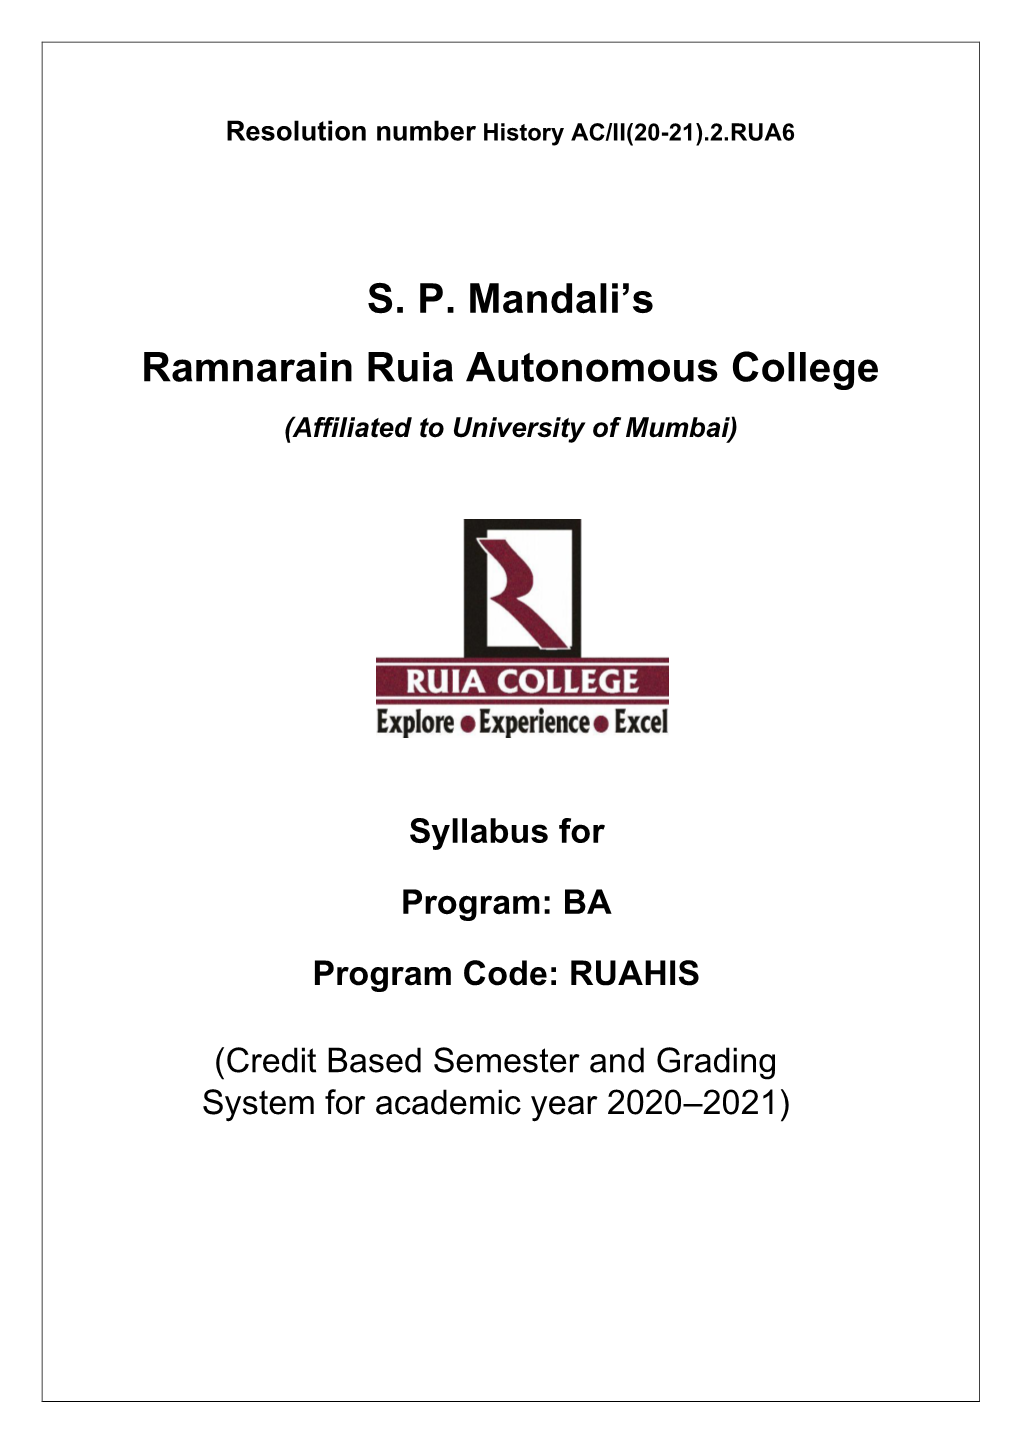 S. P. Mandali's Ramnarain Ruia Autonomous College